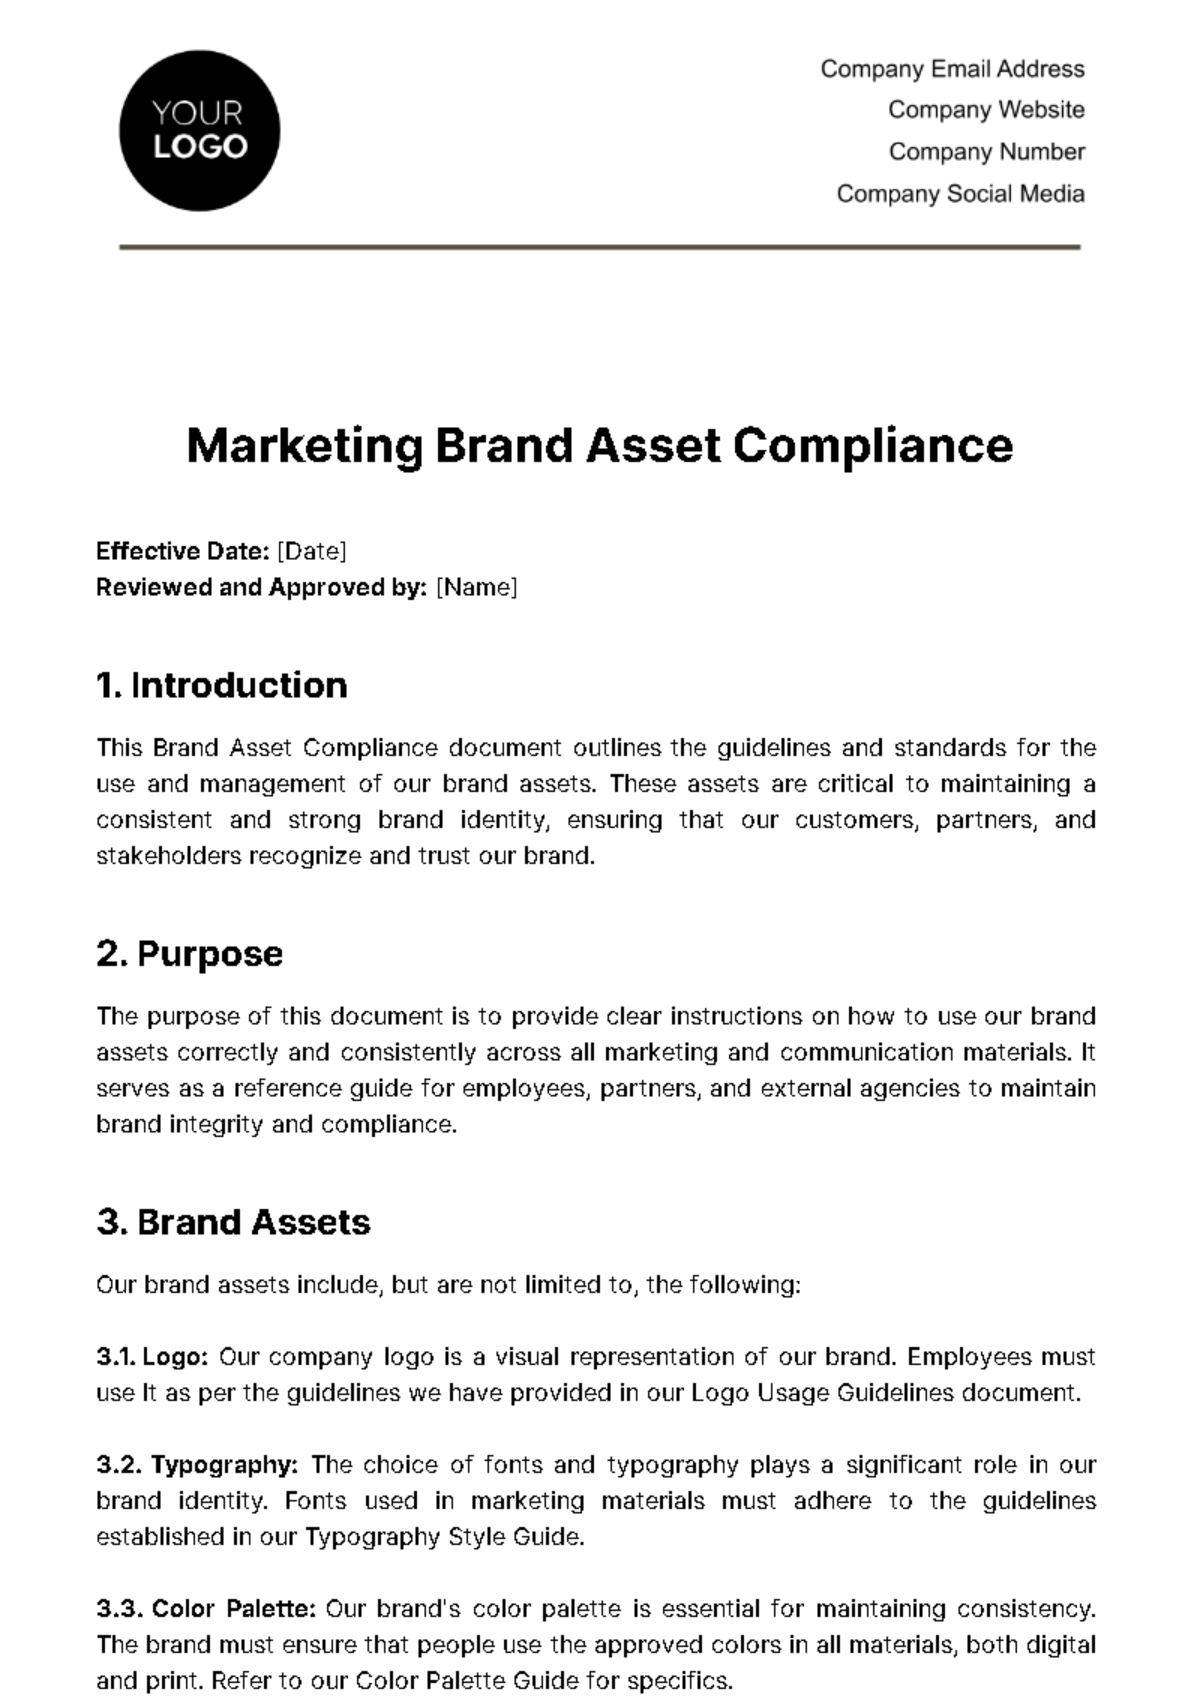 Free Marketing Brand Asset Compliance Template